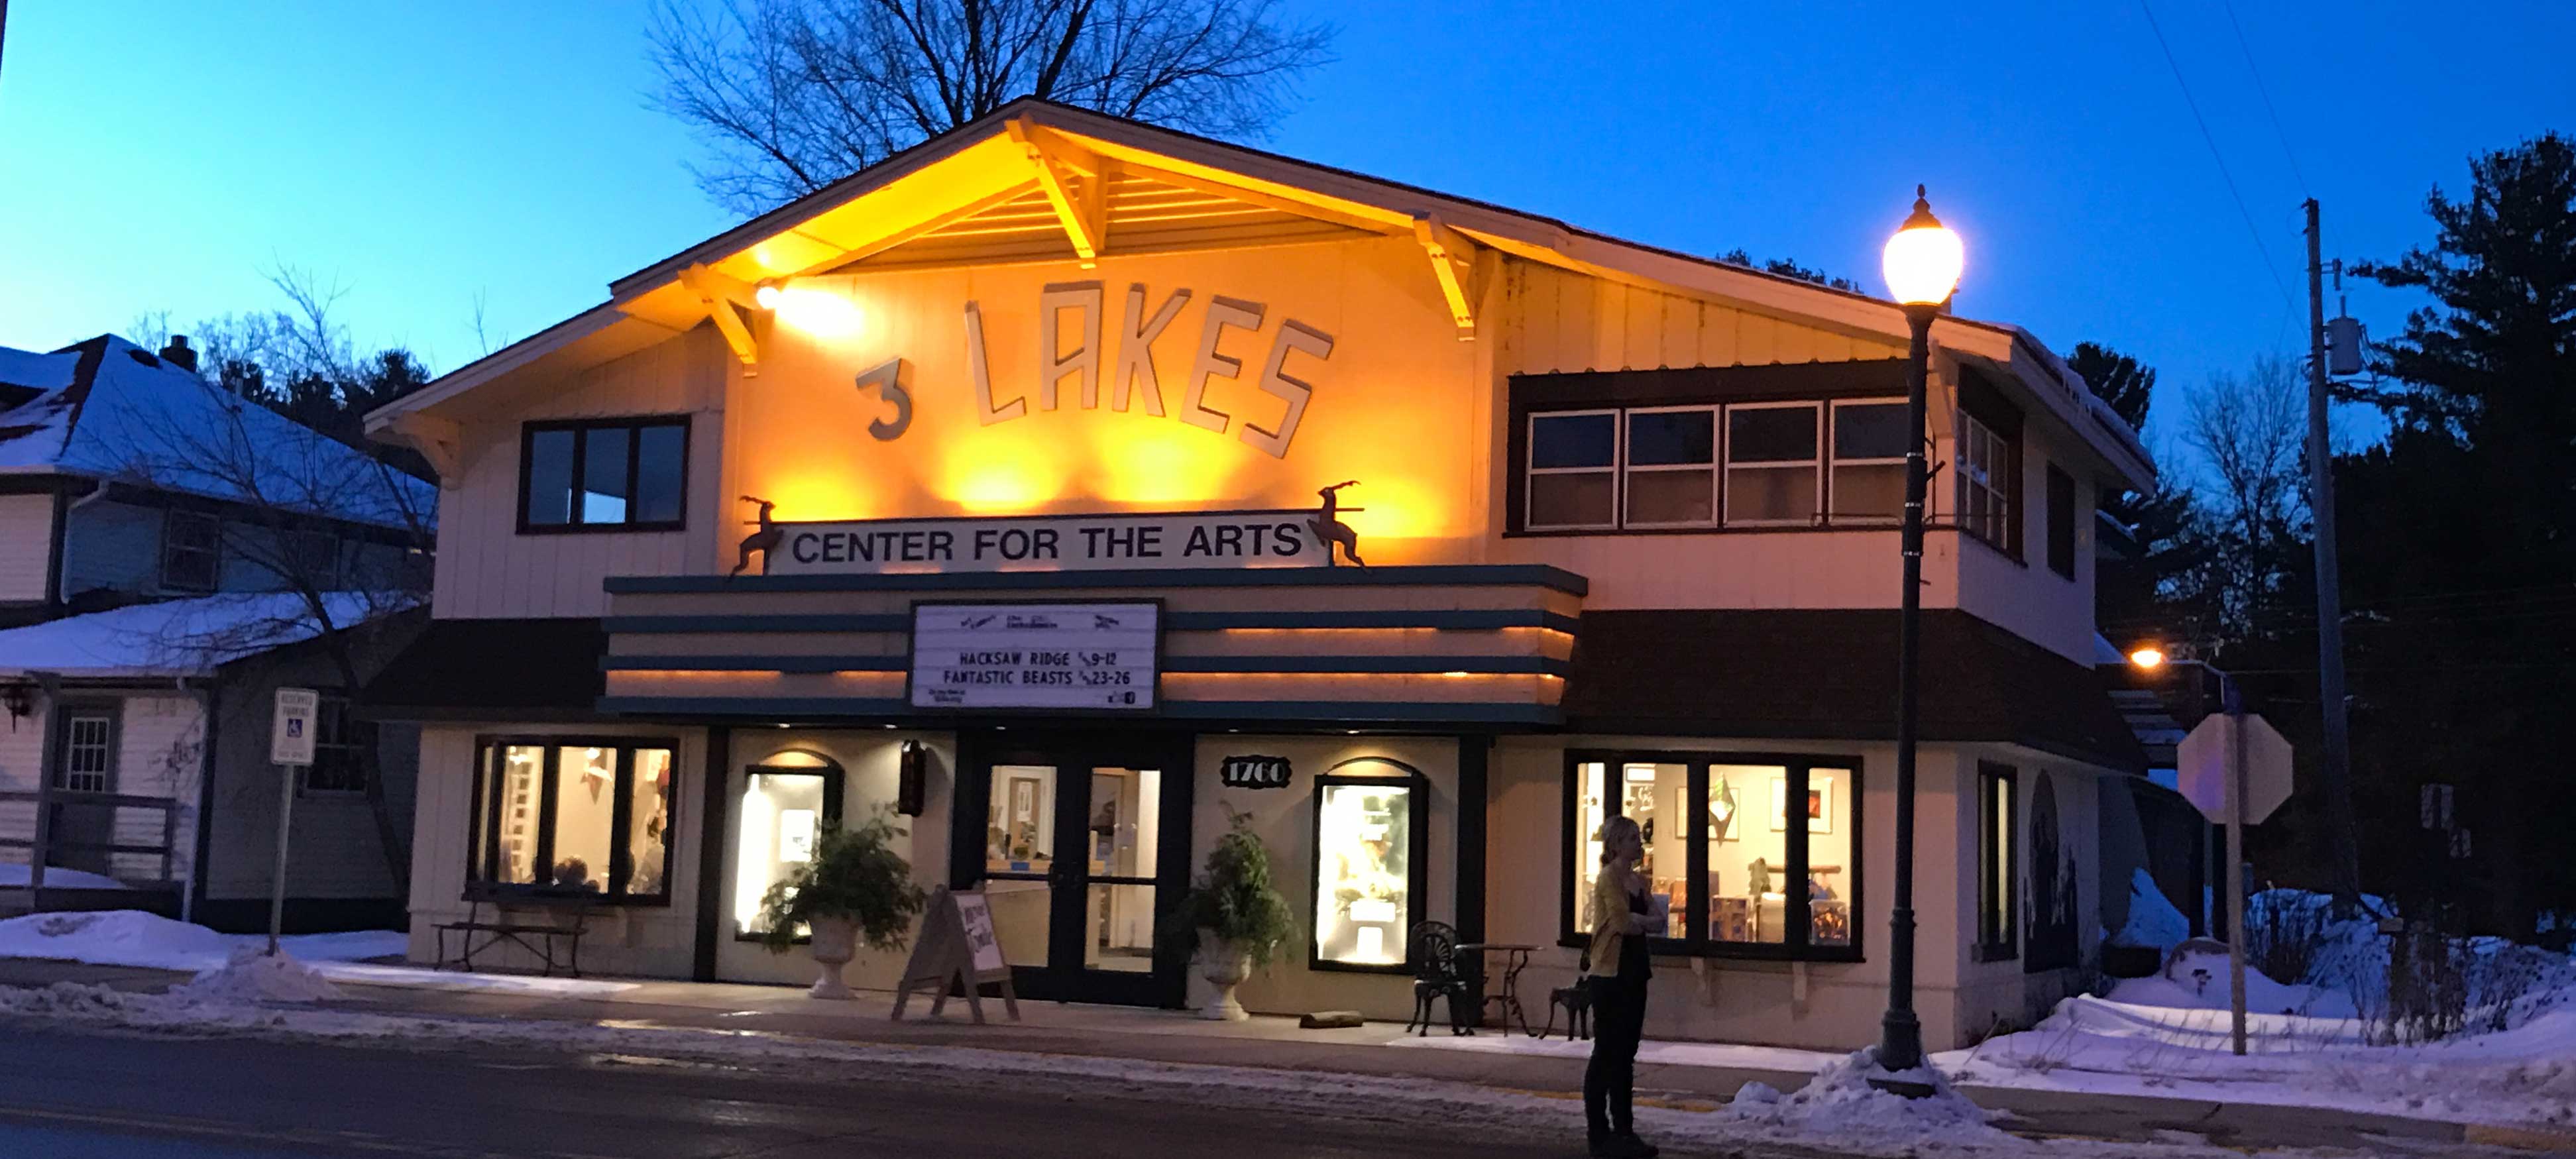 3 Lakes Arts Center